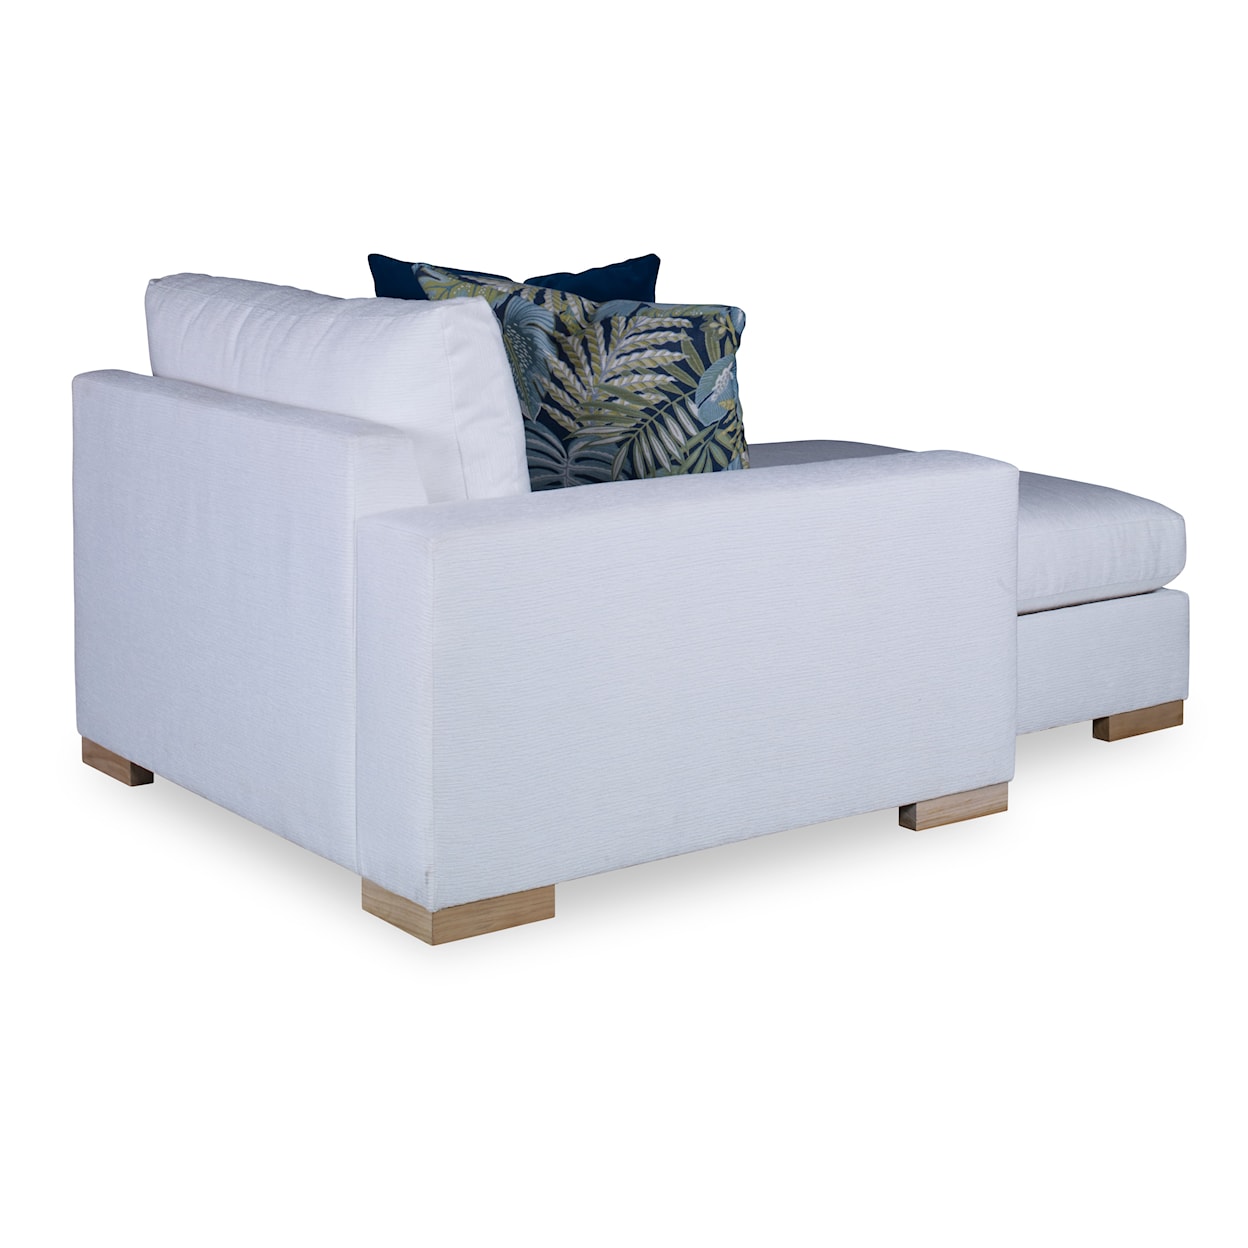 Century Outdoor Upholstery Outdoor Great Room Swivel Chair